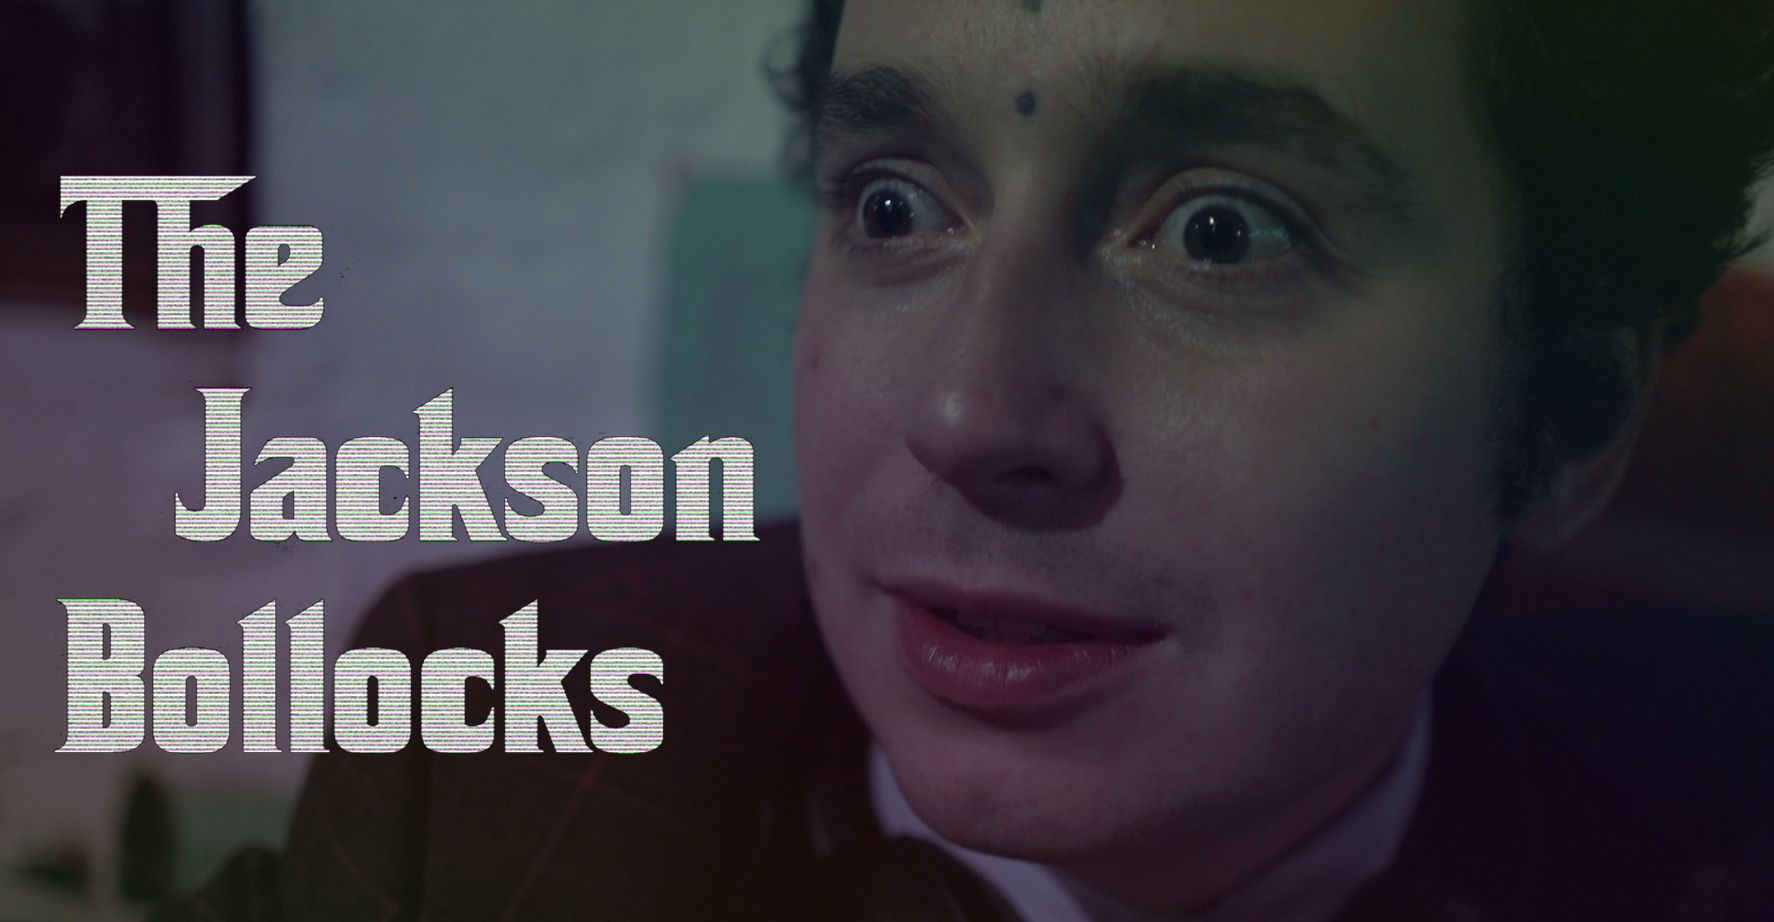 Jackson Bollocks